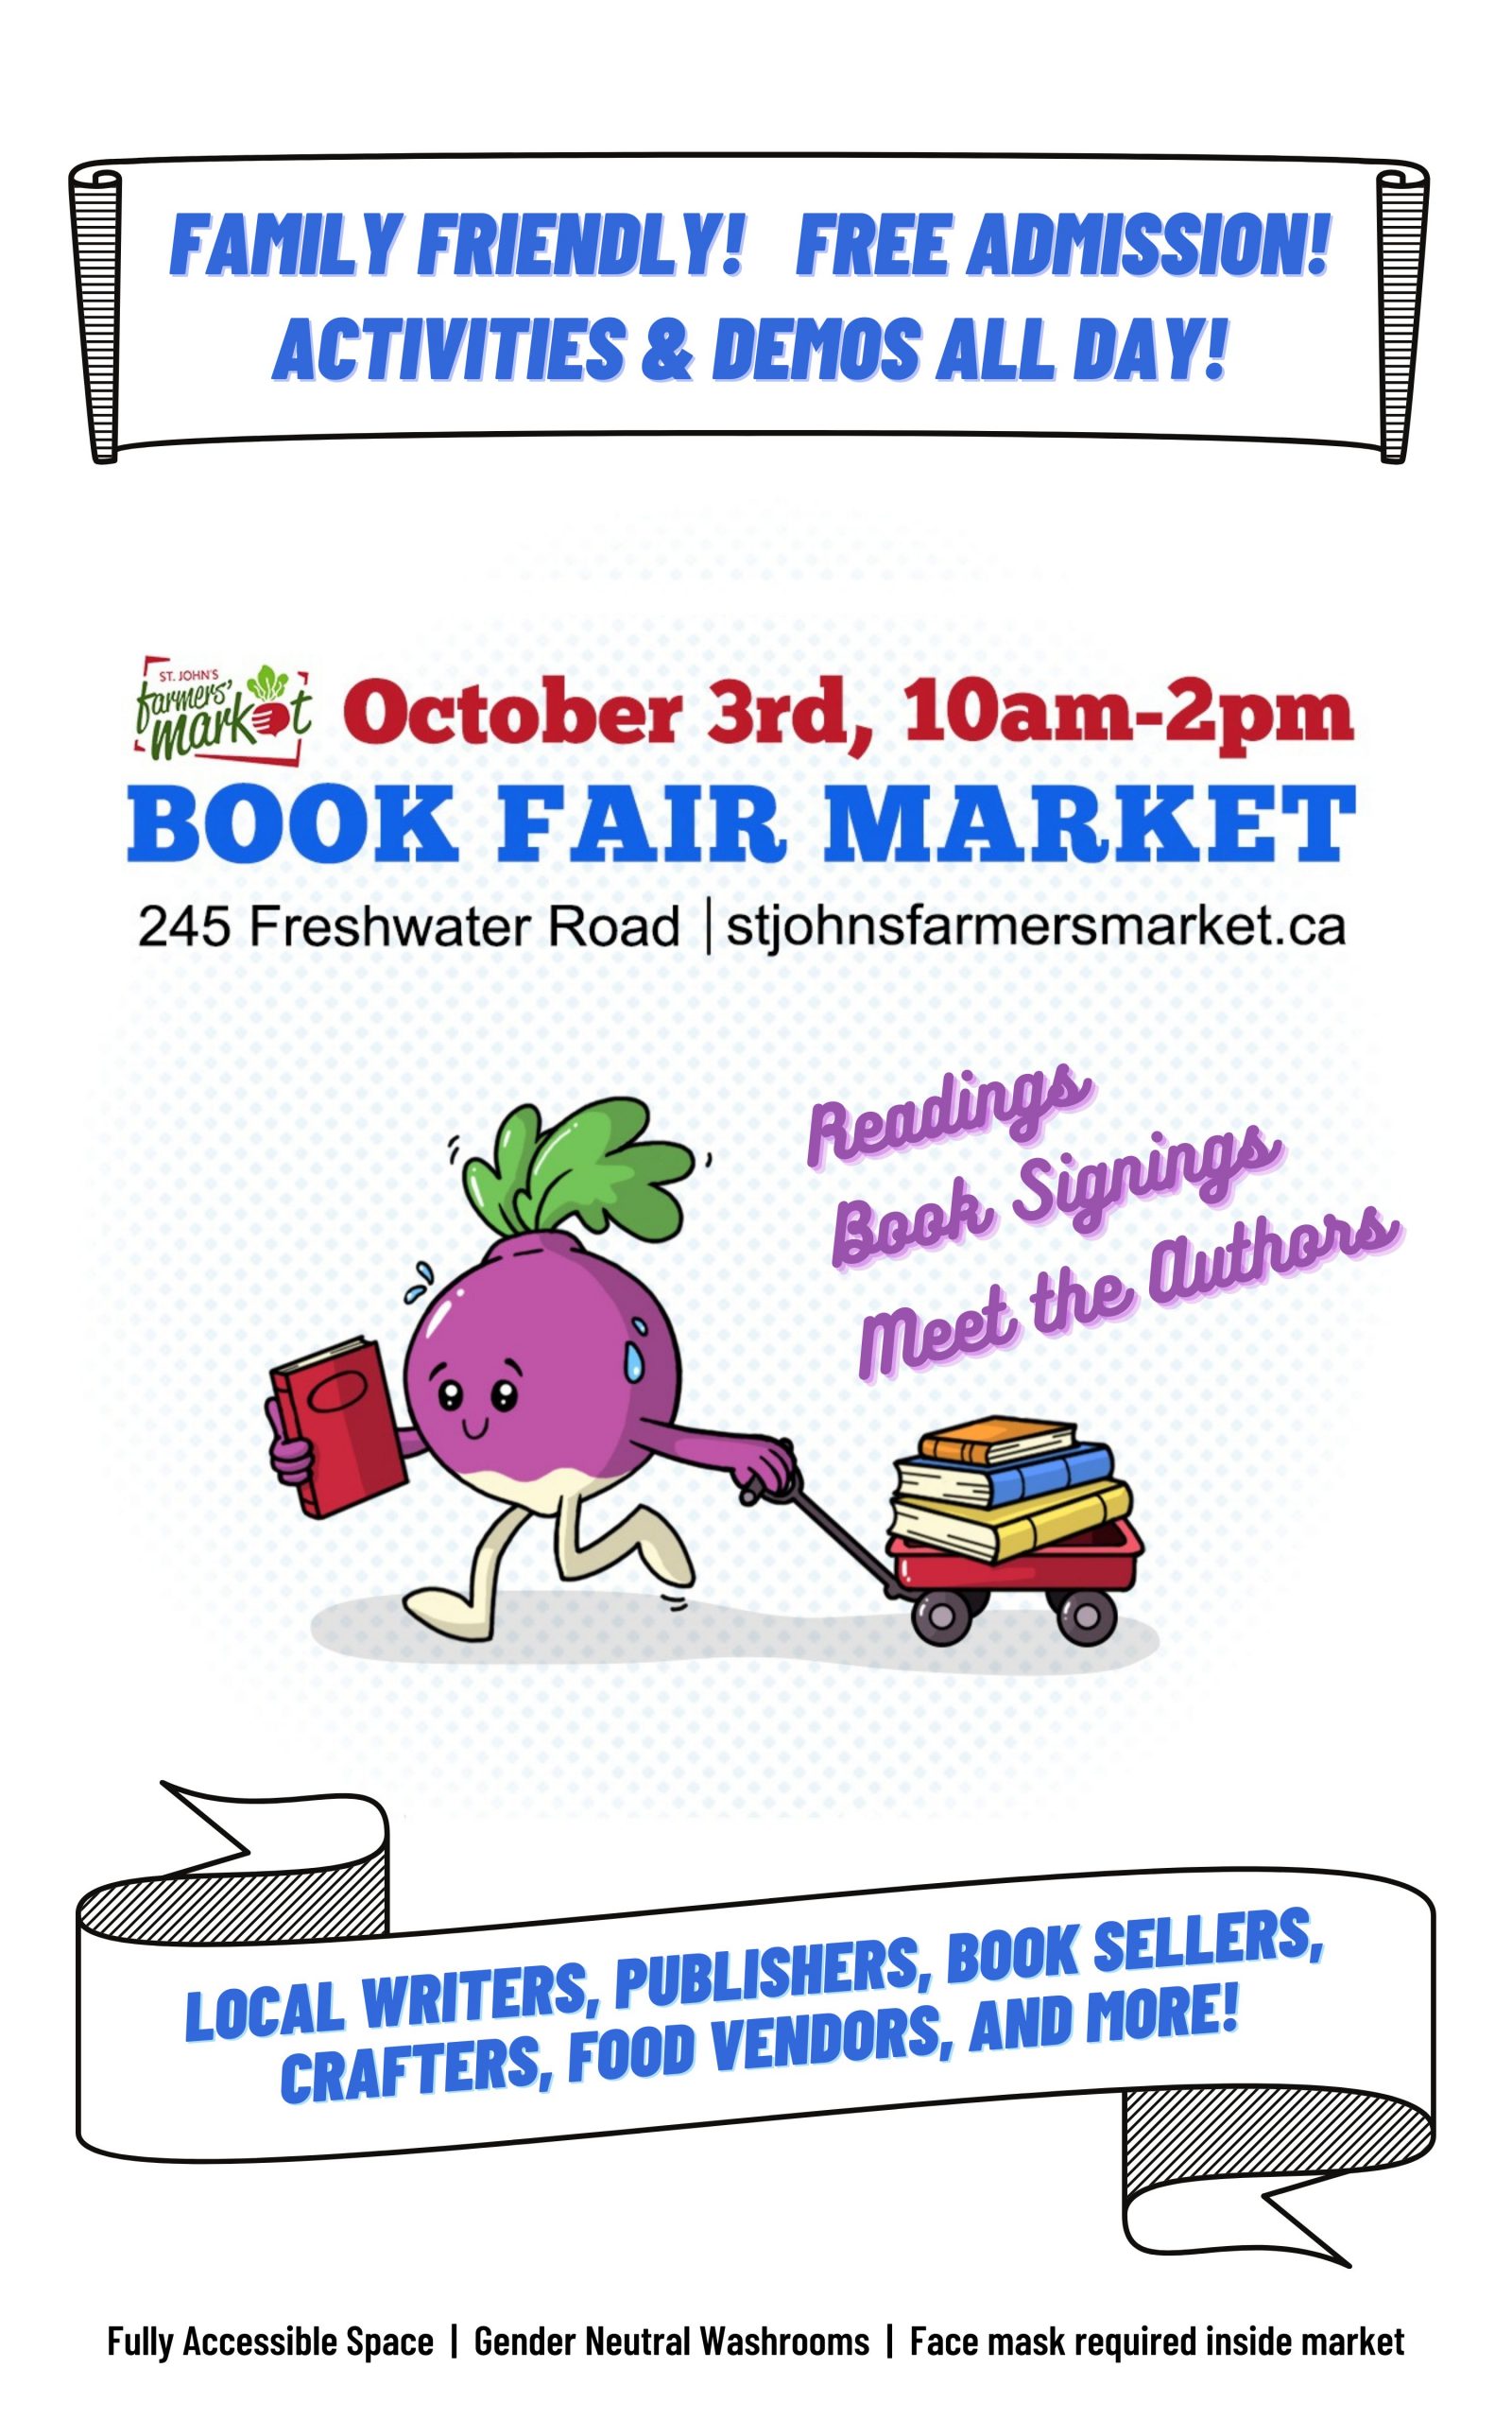 SJFM Book Fair - Sunday, October 3, 2021